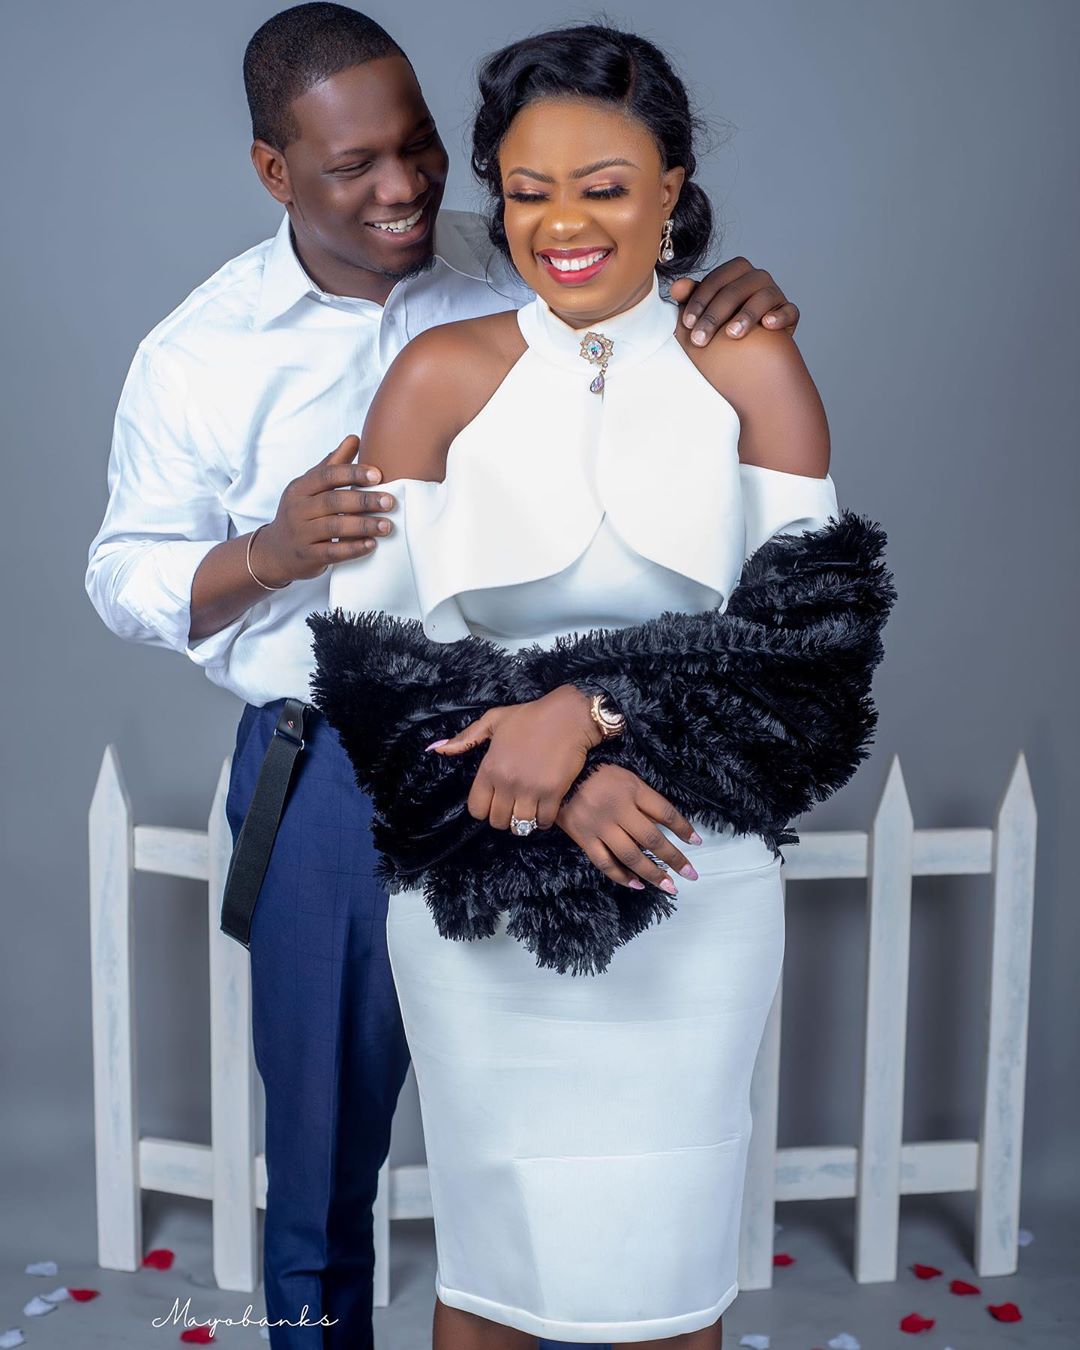 Prewedding Photos Of Seilat Adebowale And Husband, Adeyemo